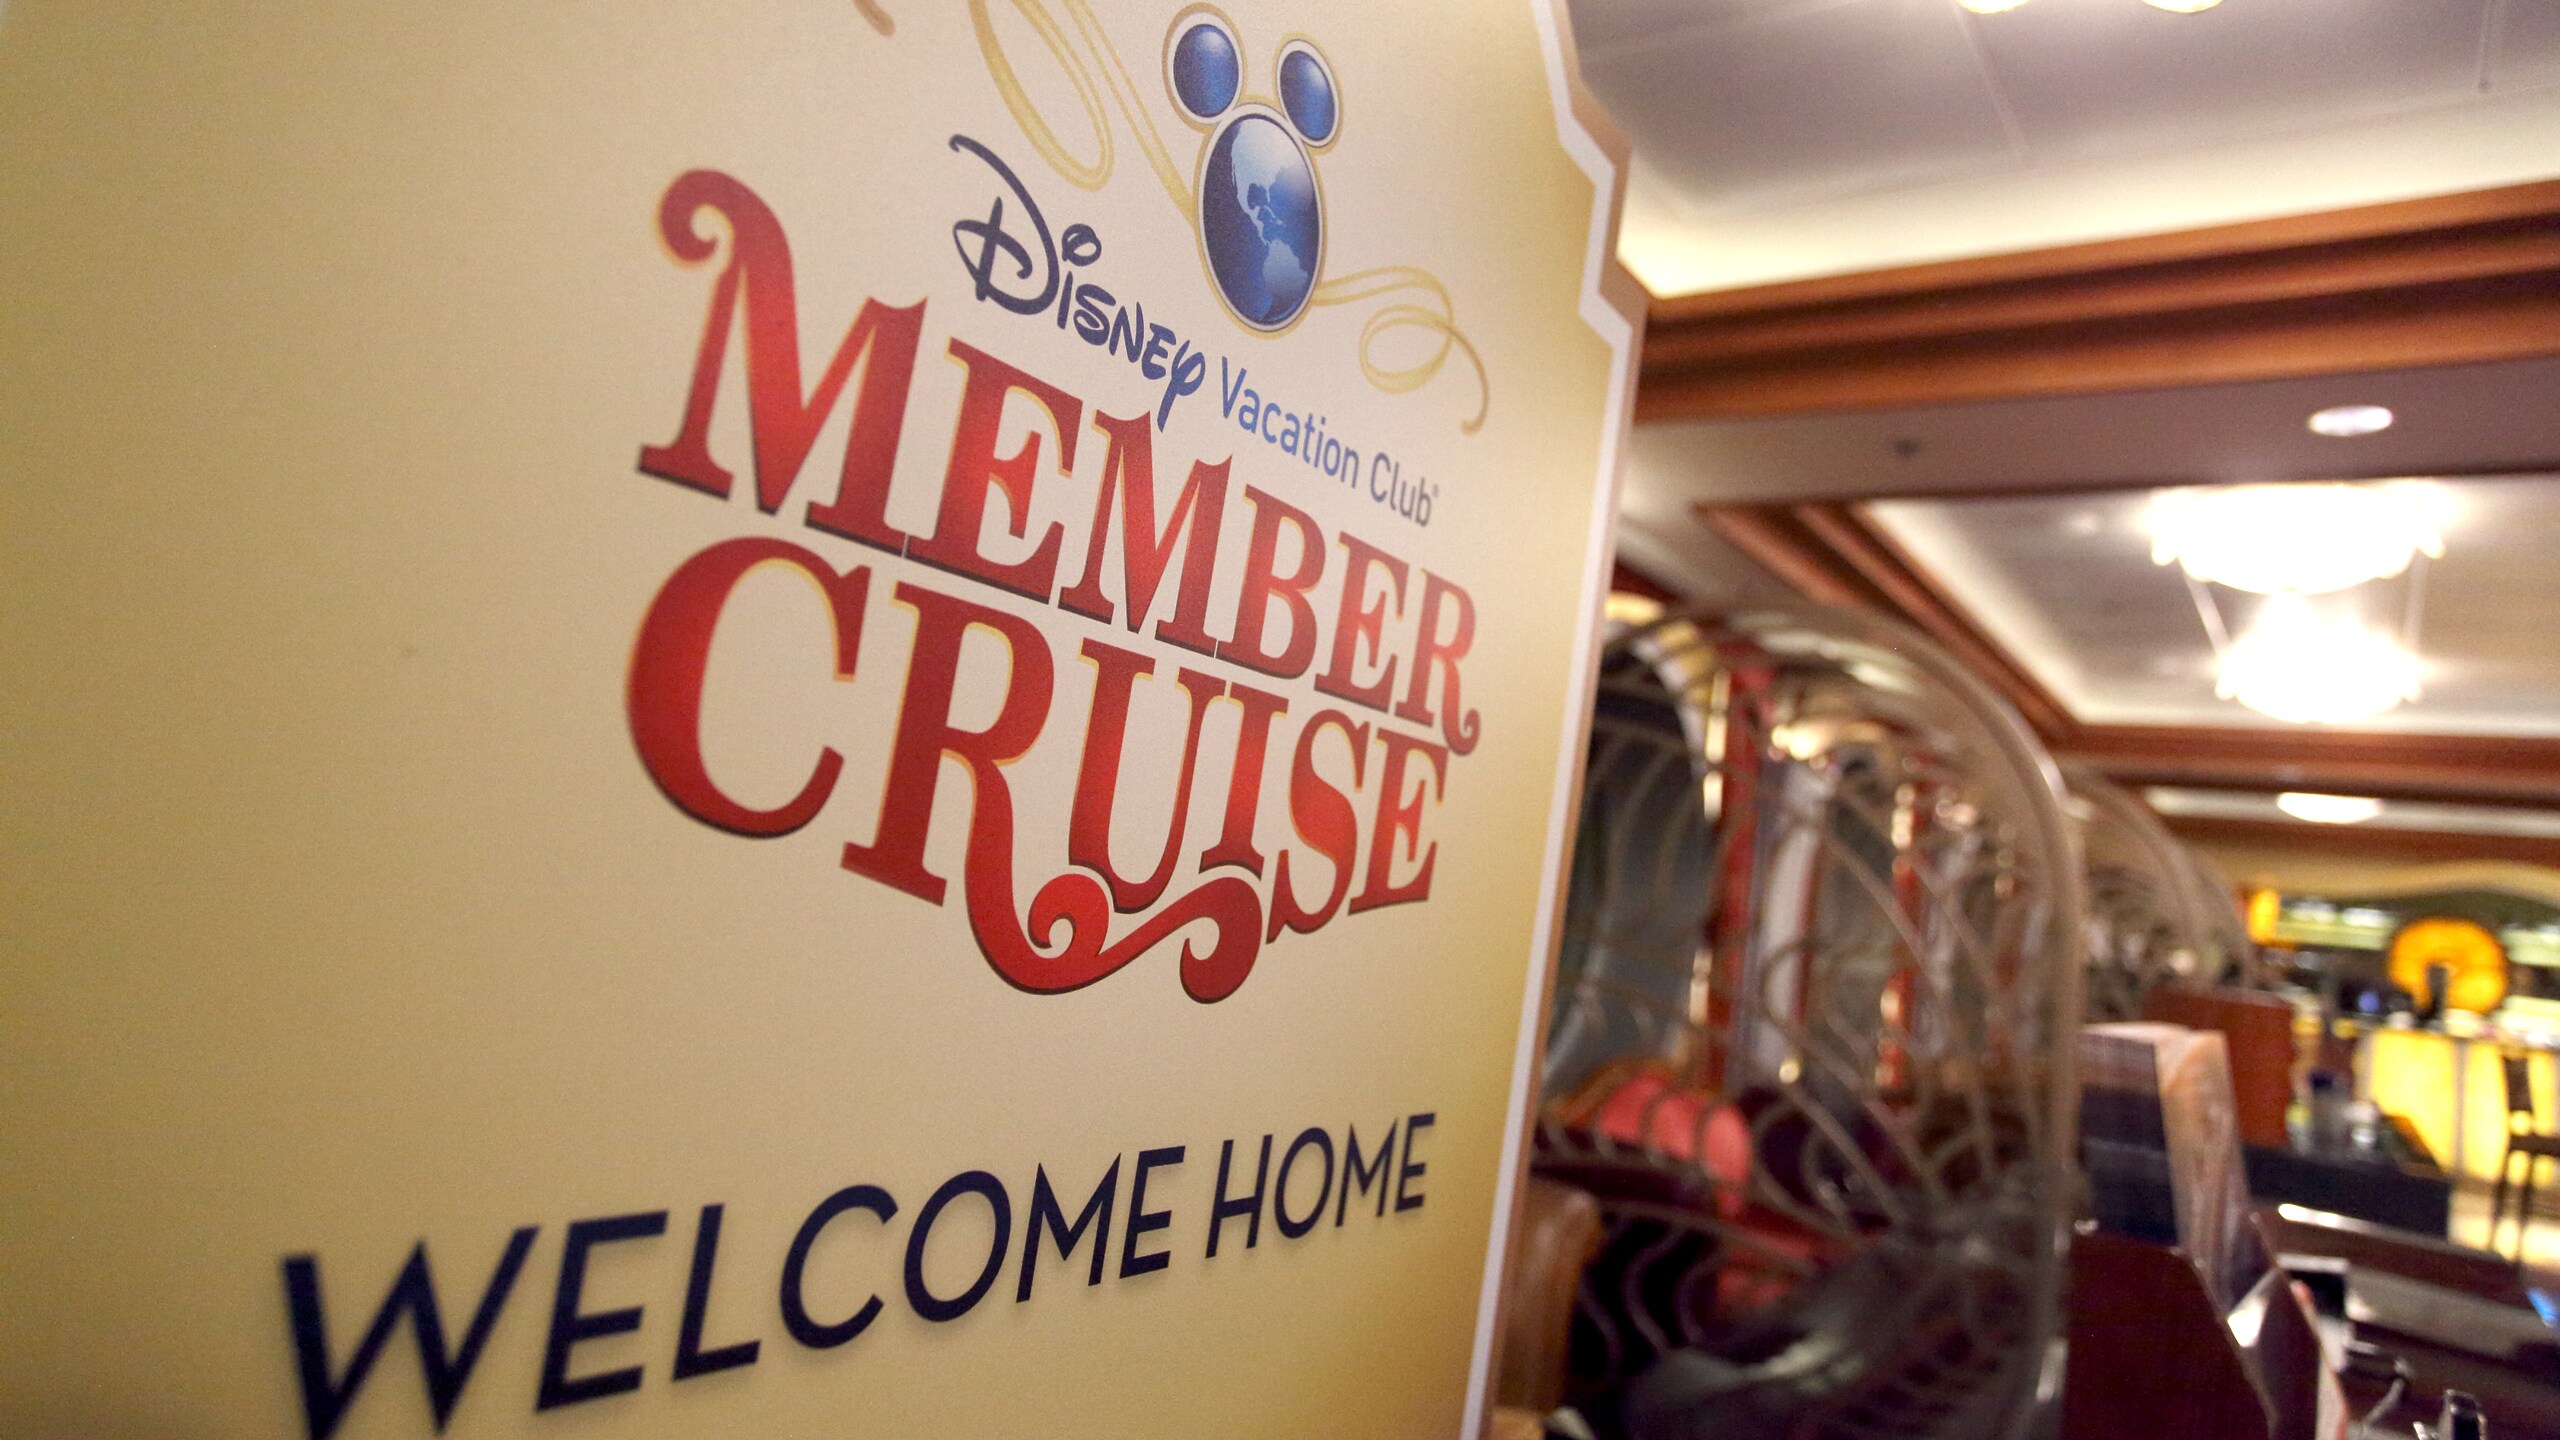 2022 Member Cruise to Alaska | Disney Vacation Club